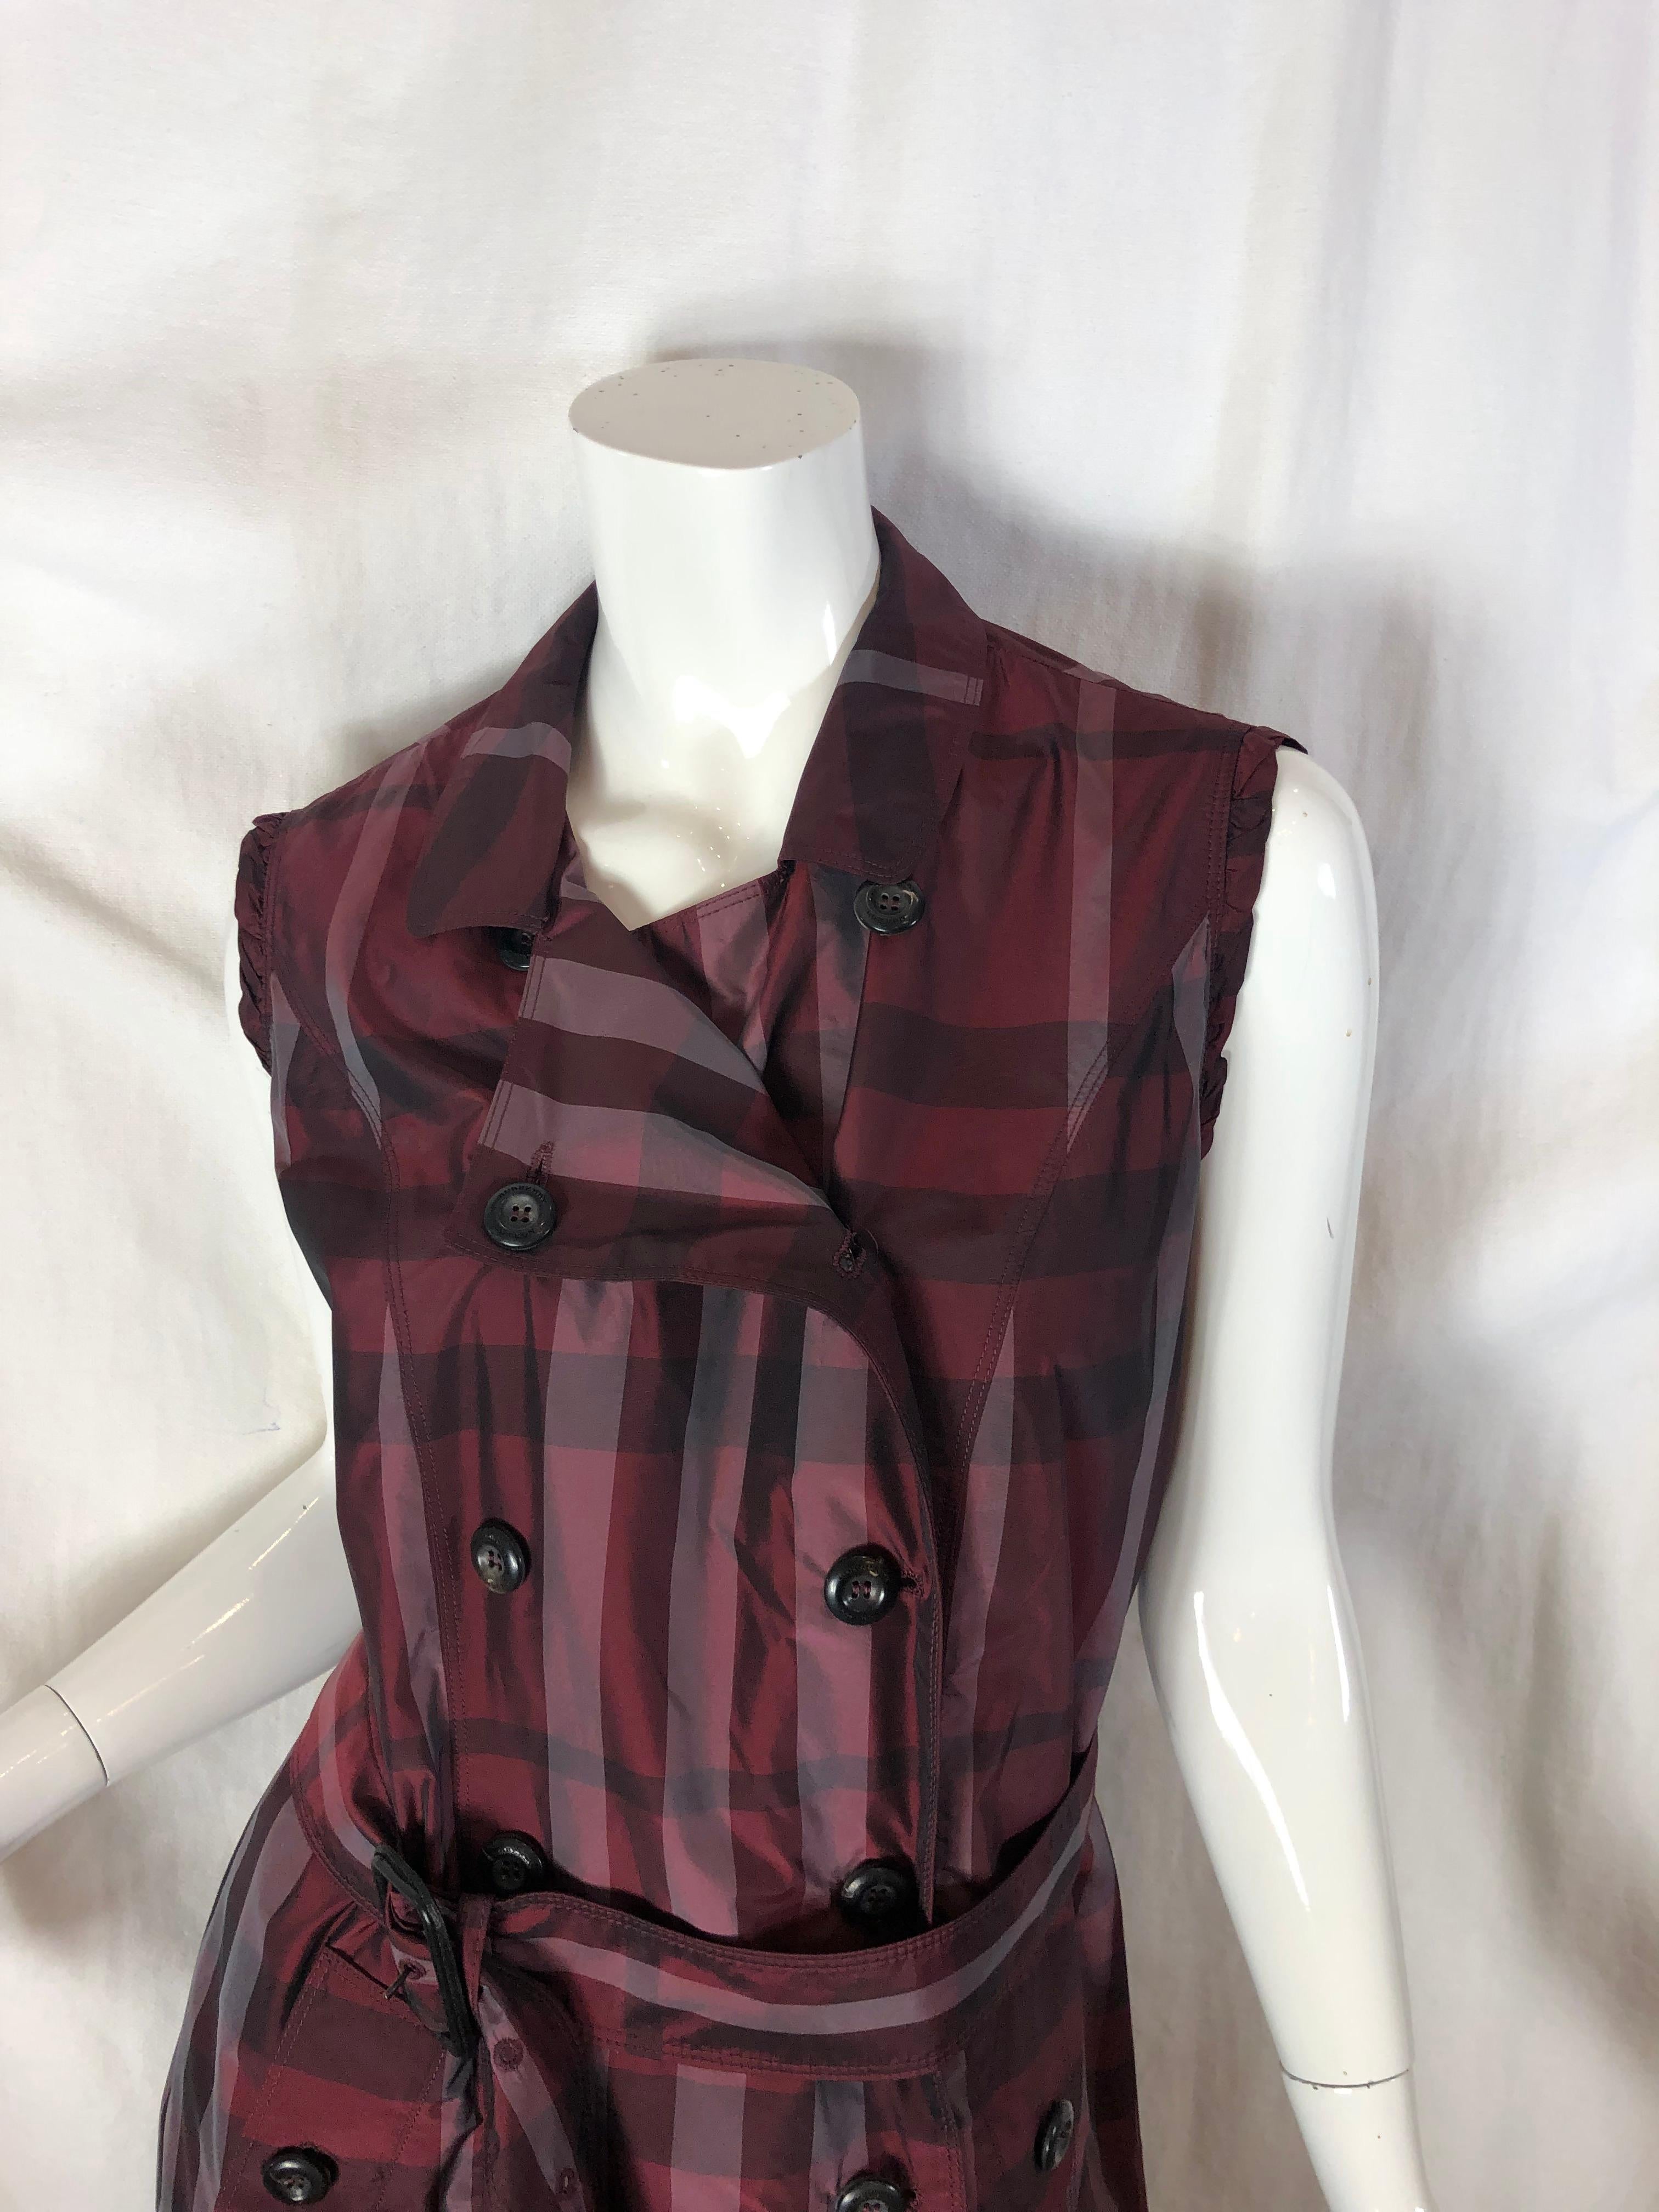 Burberry London S/L Double Breasted Dress w/ Nova Check Pattern & Belt
Size: 14
Color: Wine